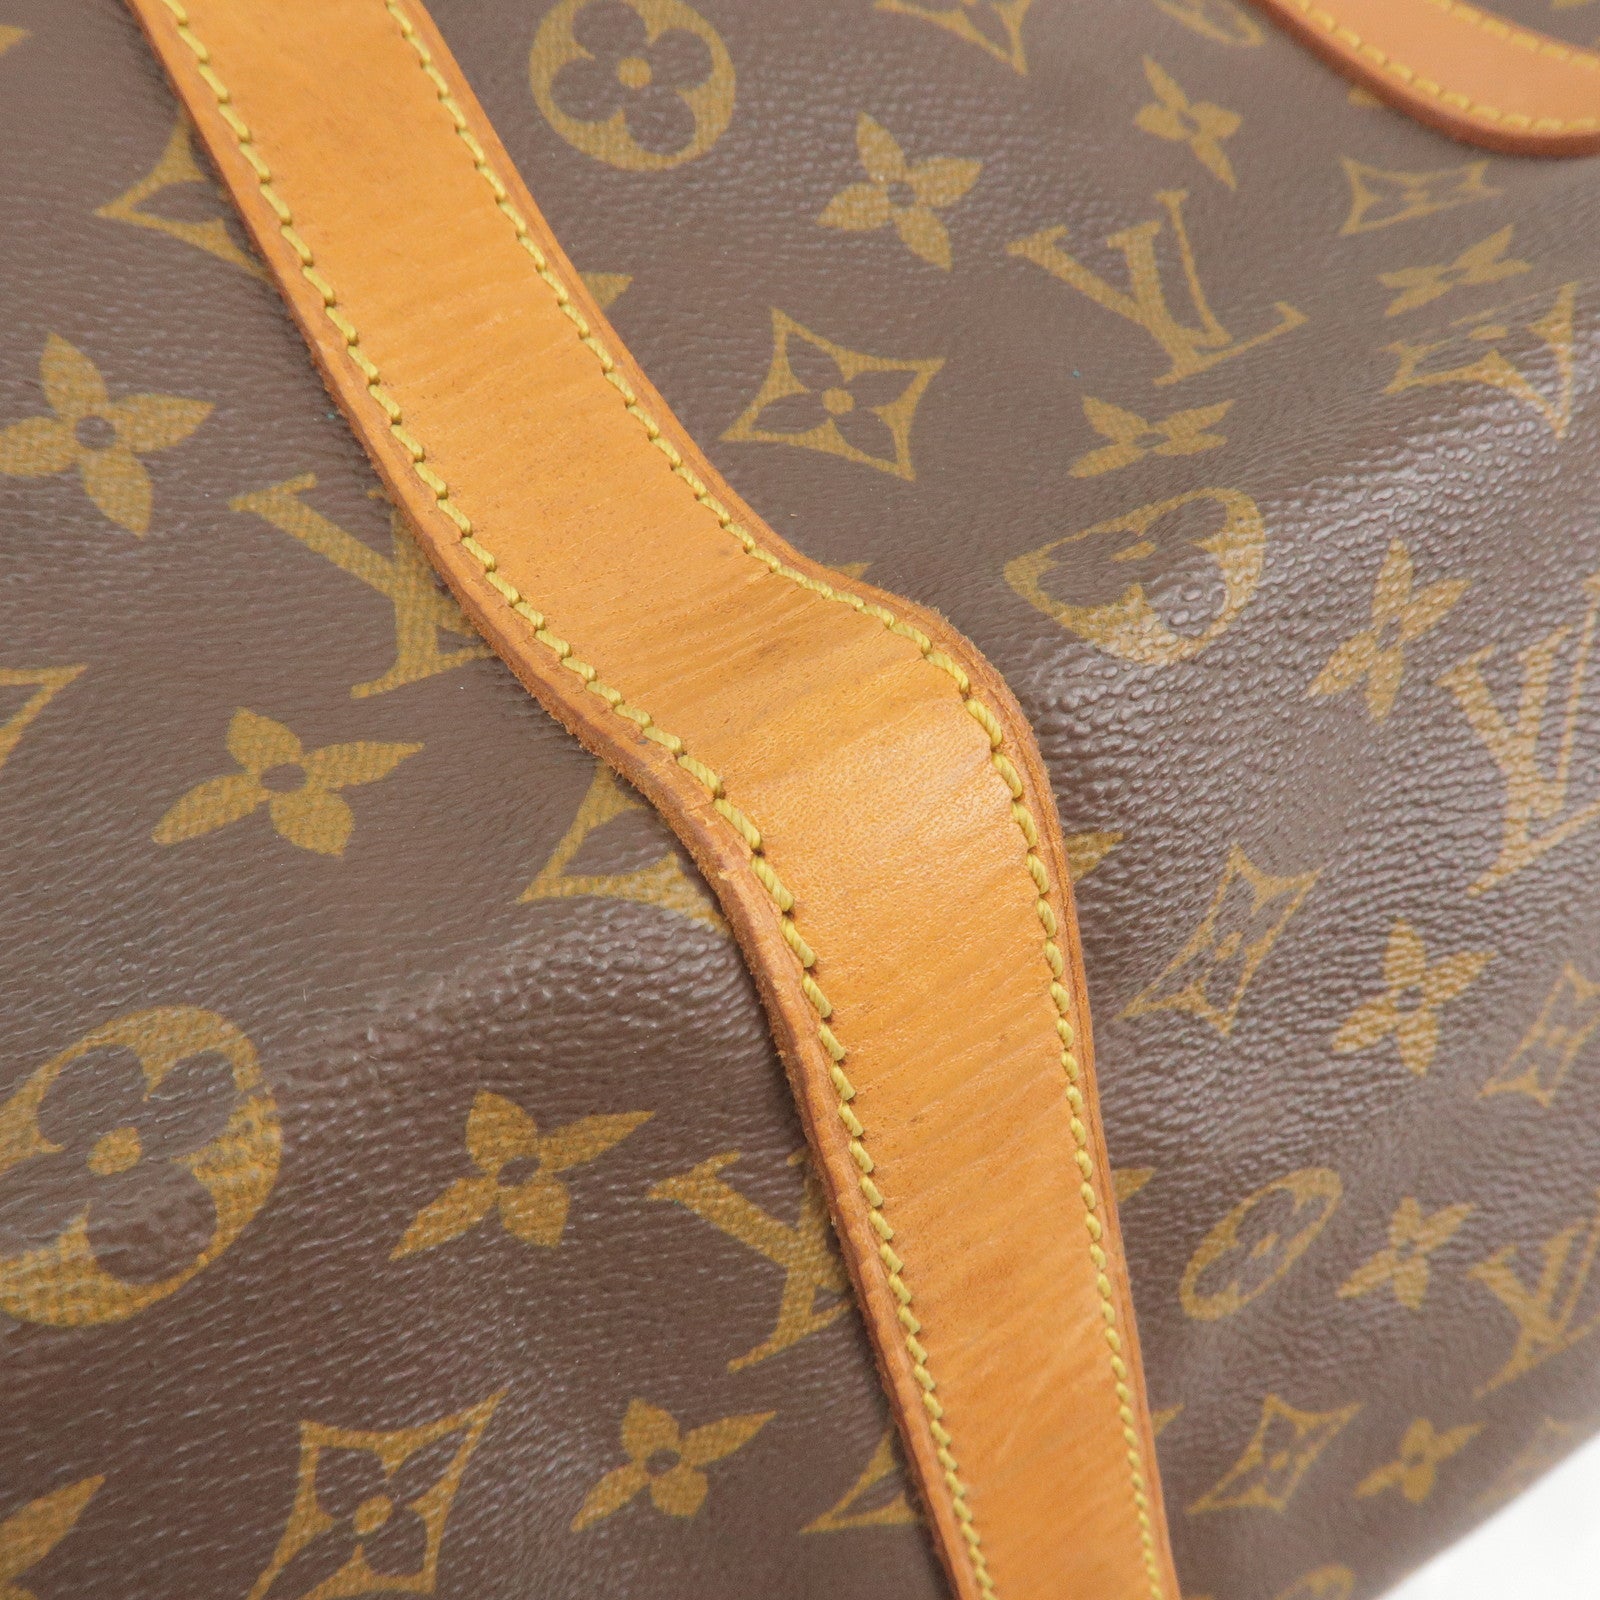 55 - Keep - Style - Monogram - Old - Vuitton - Bag - ep_vintage